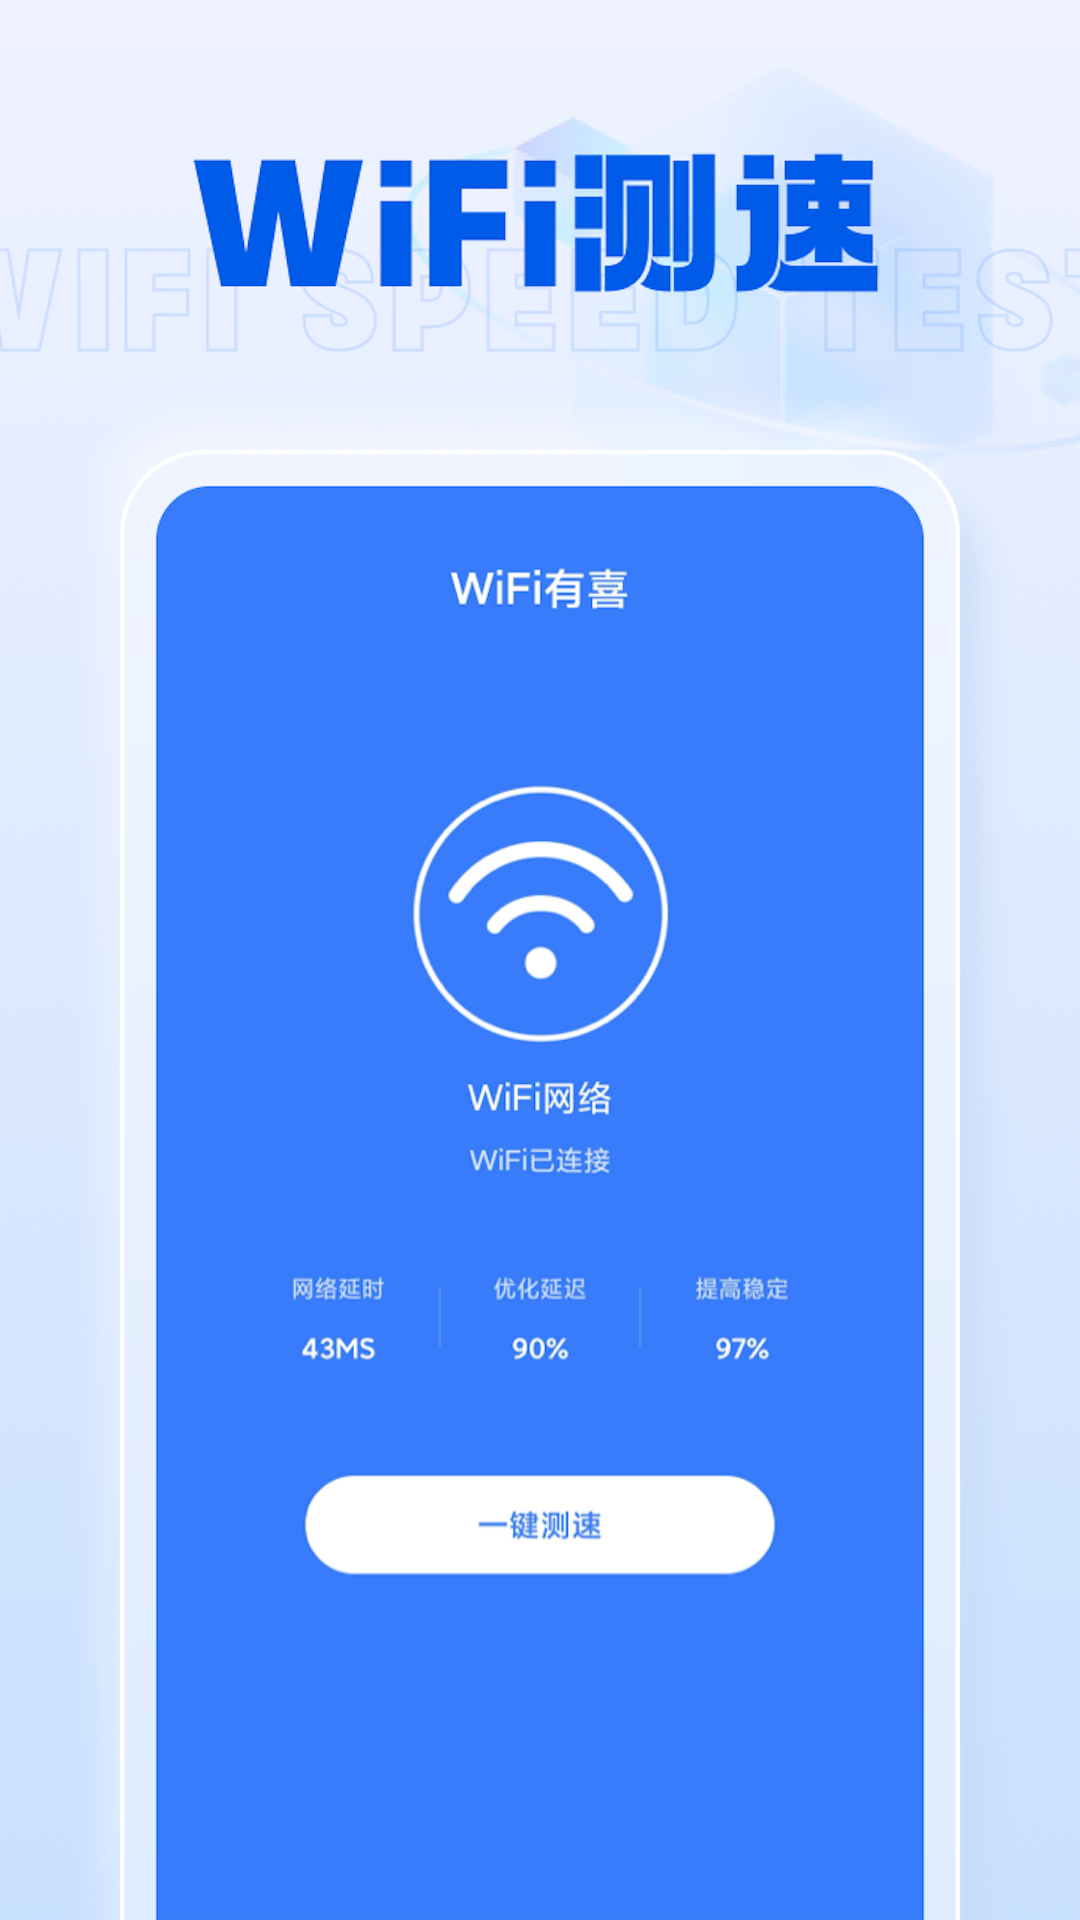 WiFi有喜网络测速APP官方版图1: